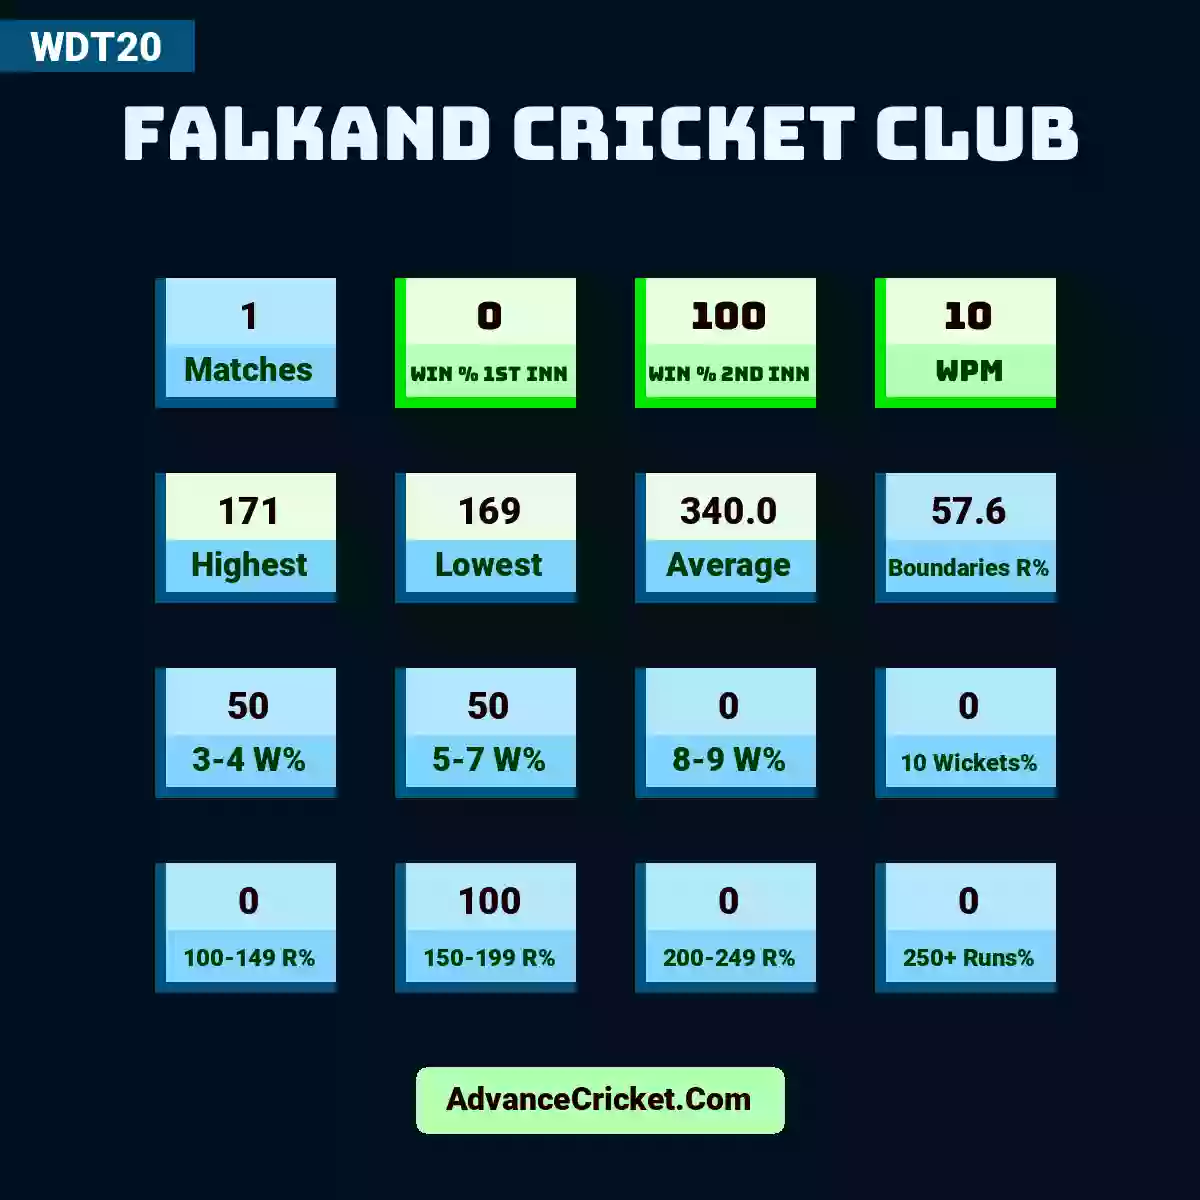 Image showing Falkand Cricket Club with Matches: 1, Win % 1st Inn: 0, Win % 2nd Inn: 100, WPM: 10, Highest: 171, Lowest: 169, Average: 340.0, Boundaries R%: 57.6, 3-4 W%: 50, 5-7 W%: 50, 8-9 W%: 0, 10 Wickets%: 0, 100-149 R%: 0, 150-199 R%: 100, 200-249 R%: 0, 250+ Runs%: 0.